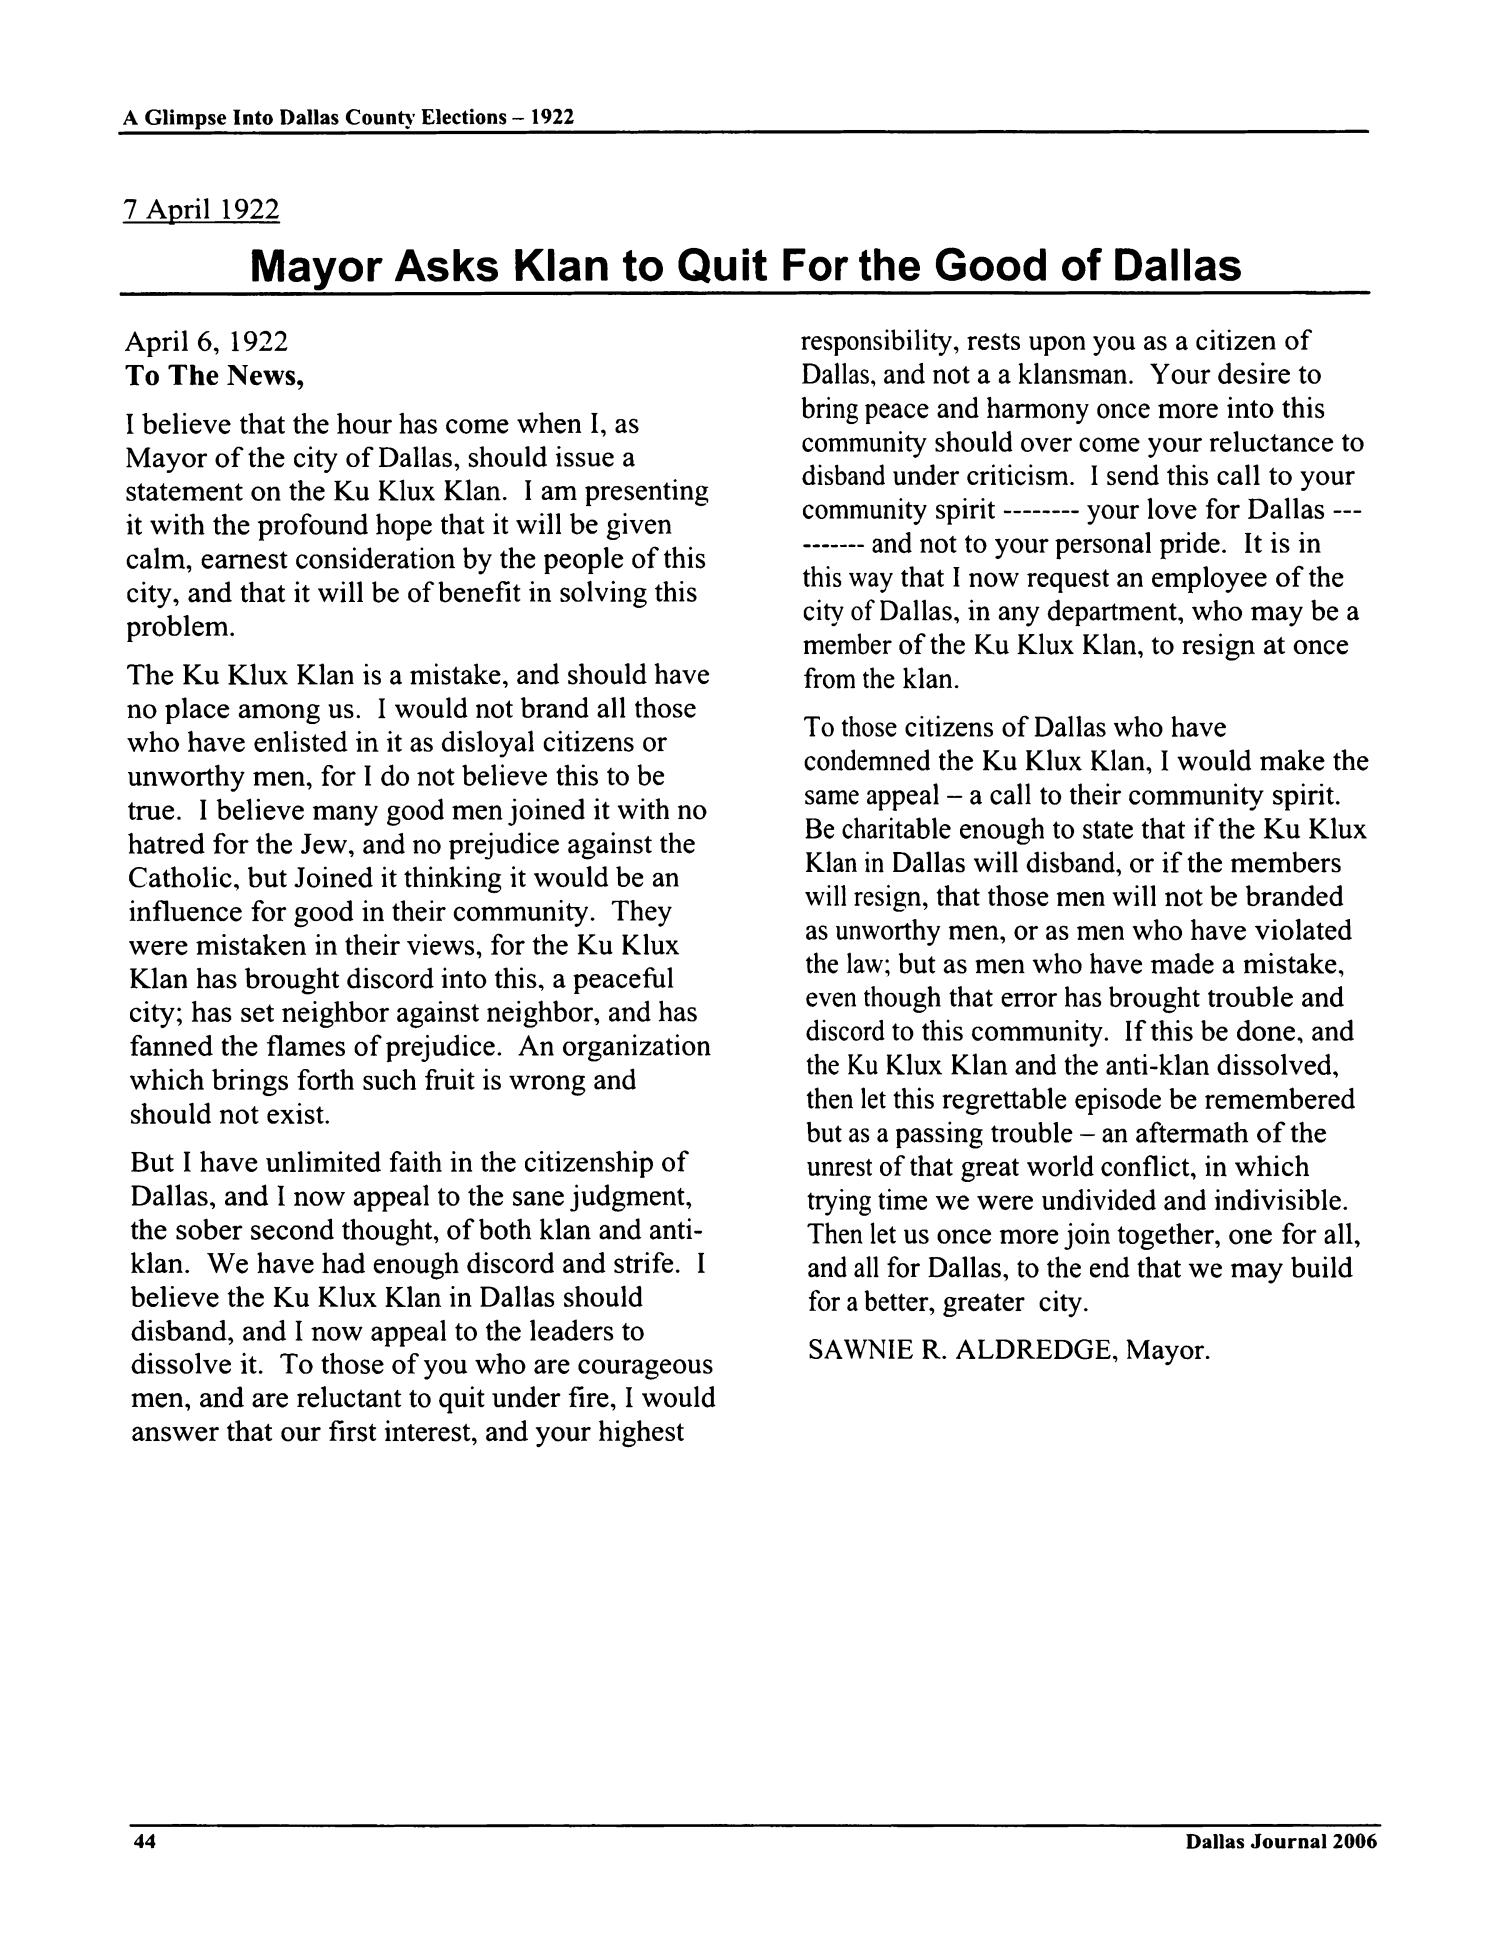 The Dallas Journal, Volume 51, 2006
                                                
                                                    44
                                                